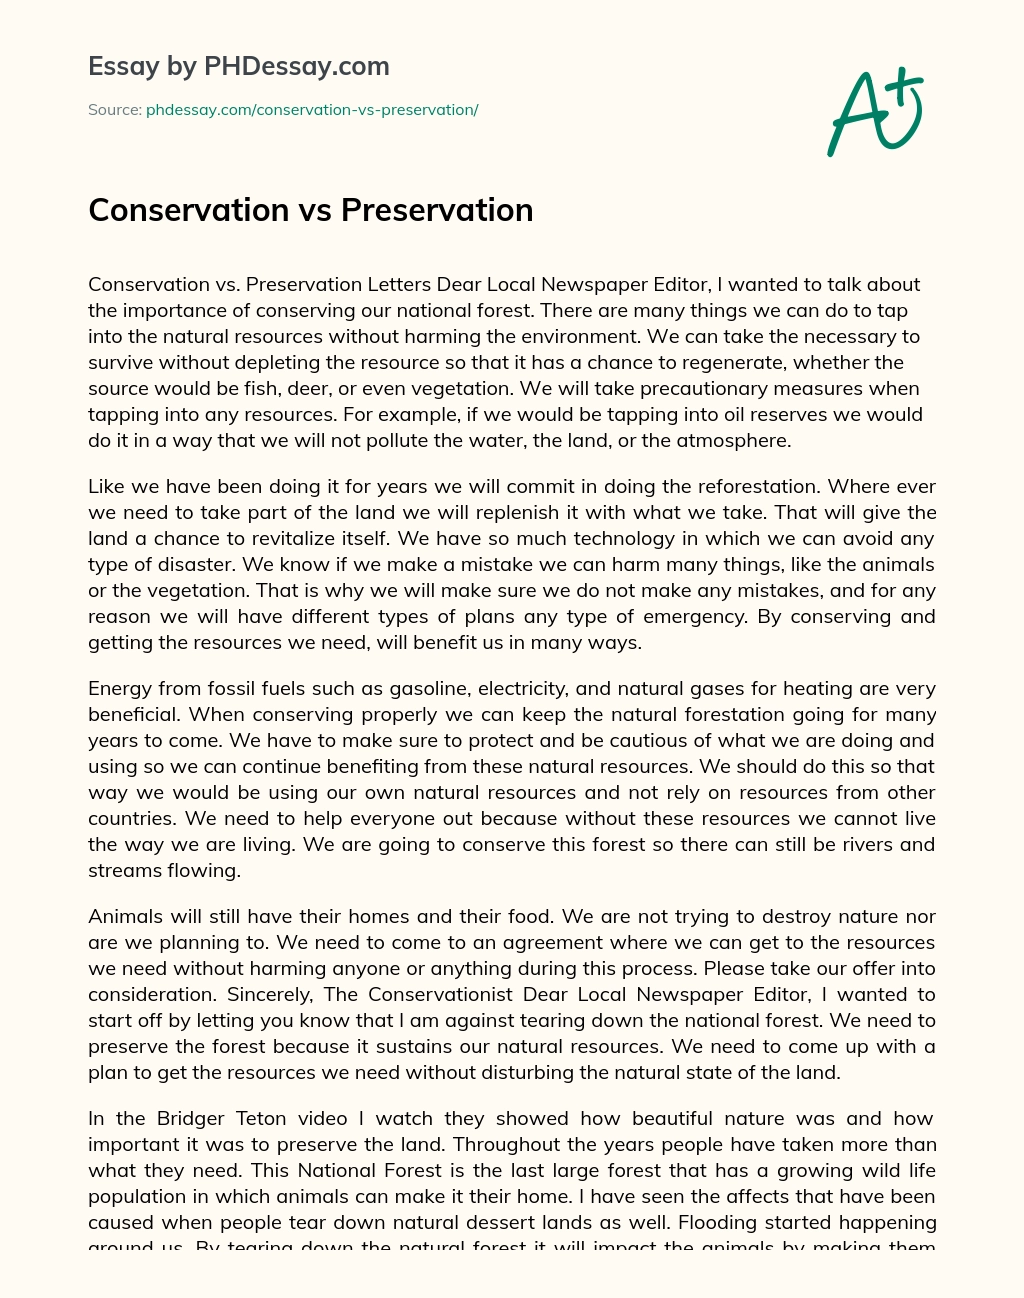 Conservation vs Preservation essay